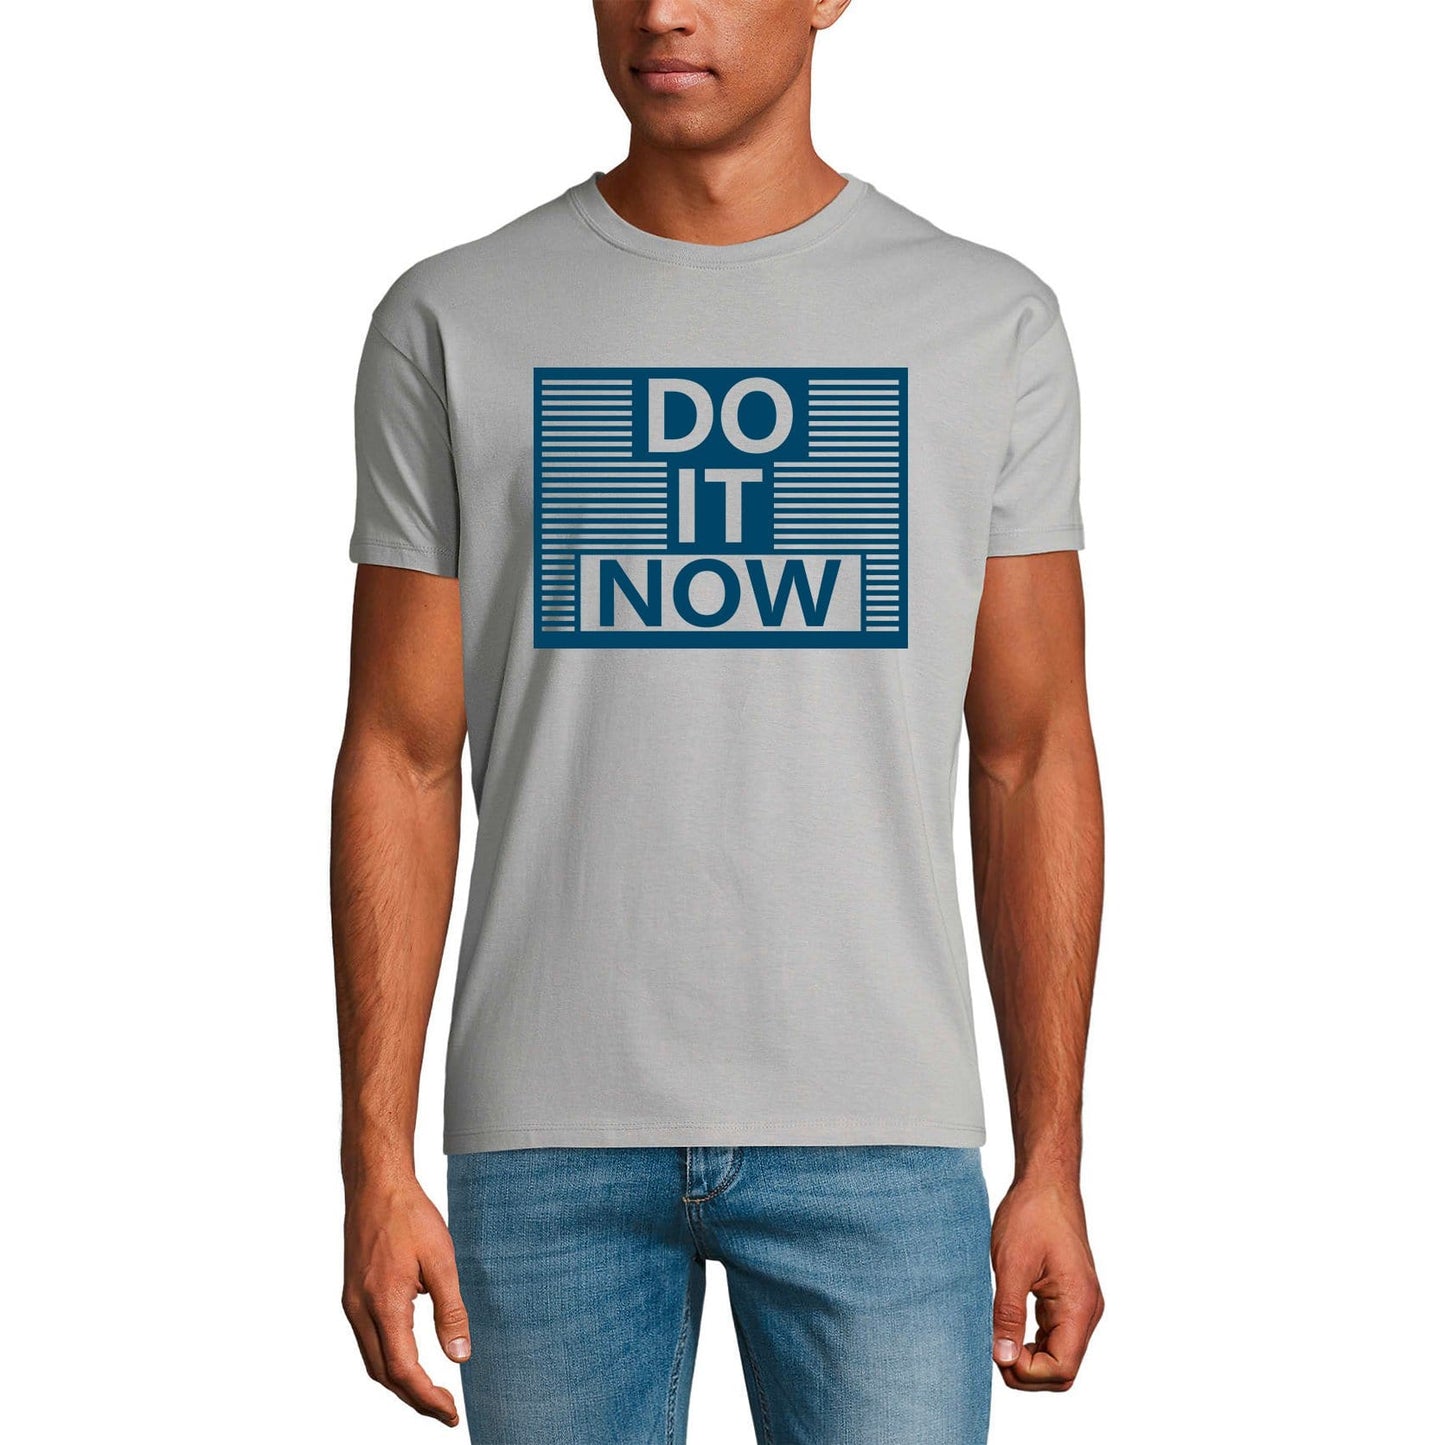 ULTRABASIC Men's Graphic T-Shirt Do It Now - Motivational Success Shirt for Men